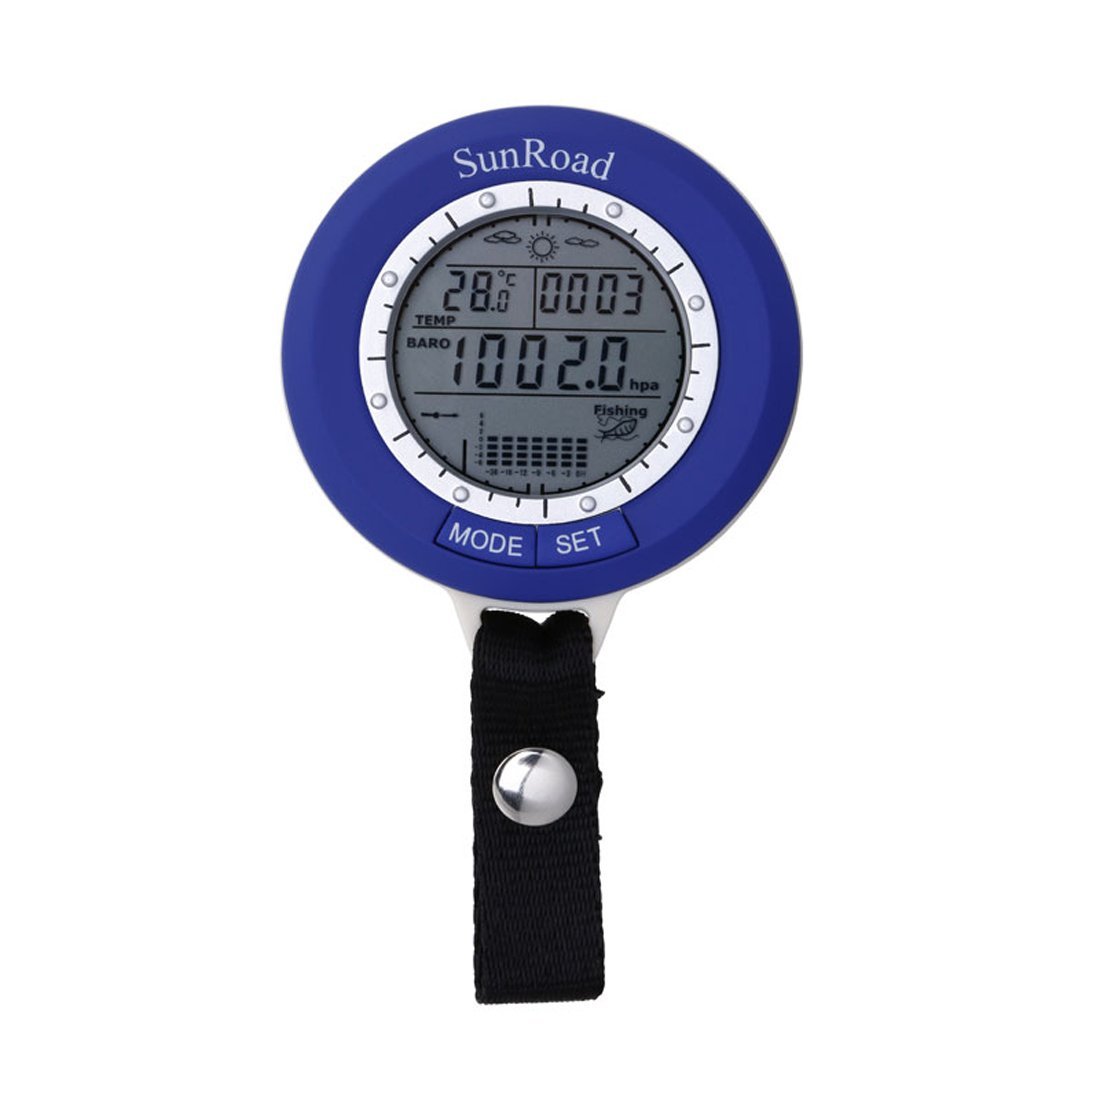 SunRoad SR204 Mini LCD Digital Fishing Barometer Altimeter Thermometer